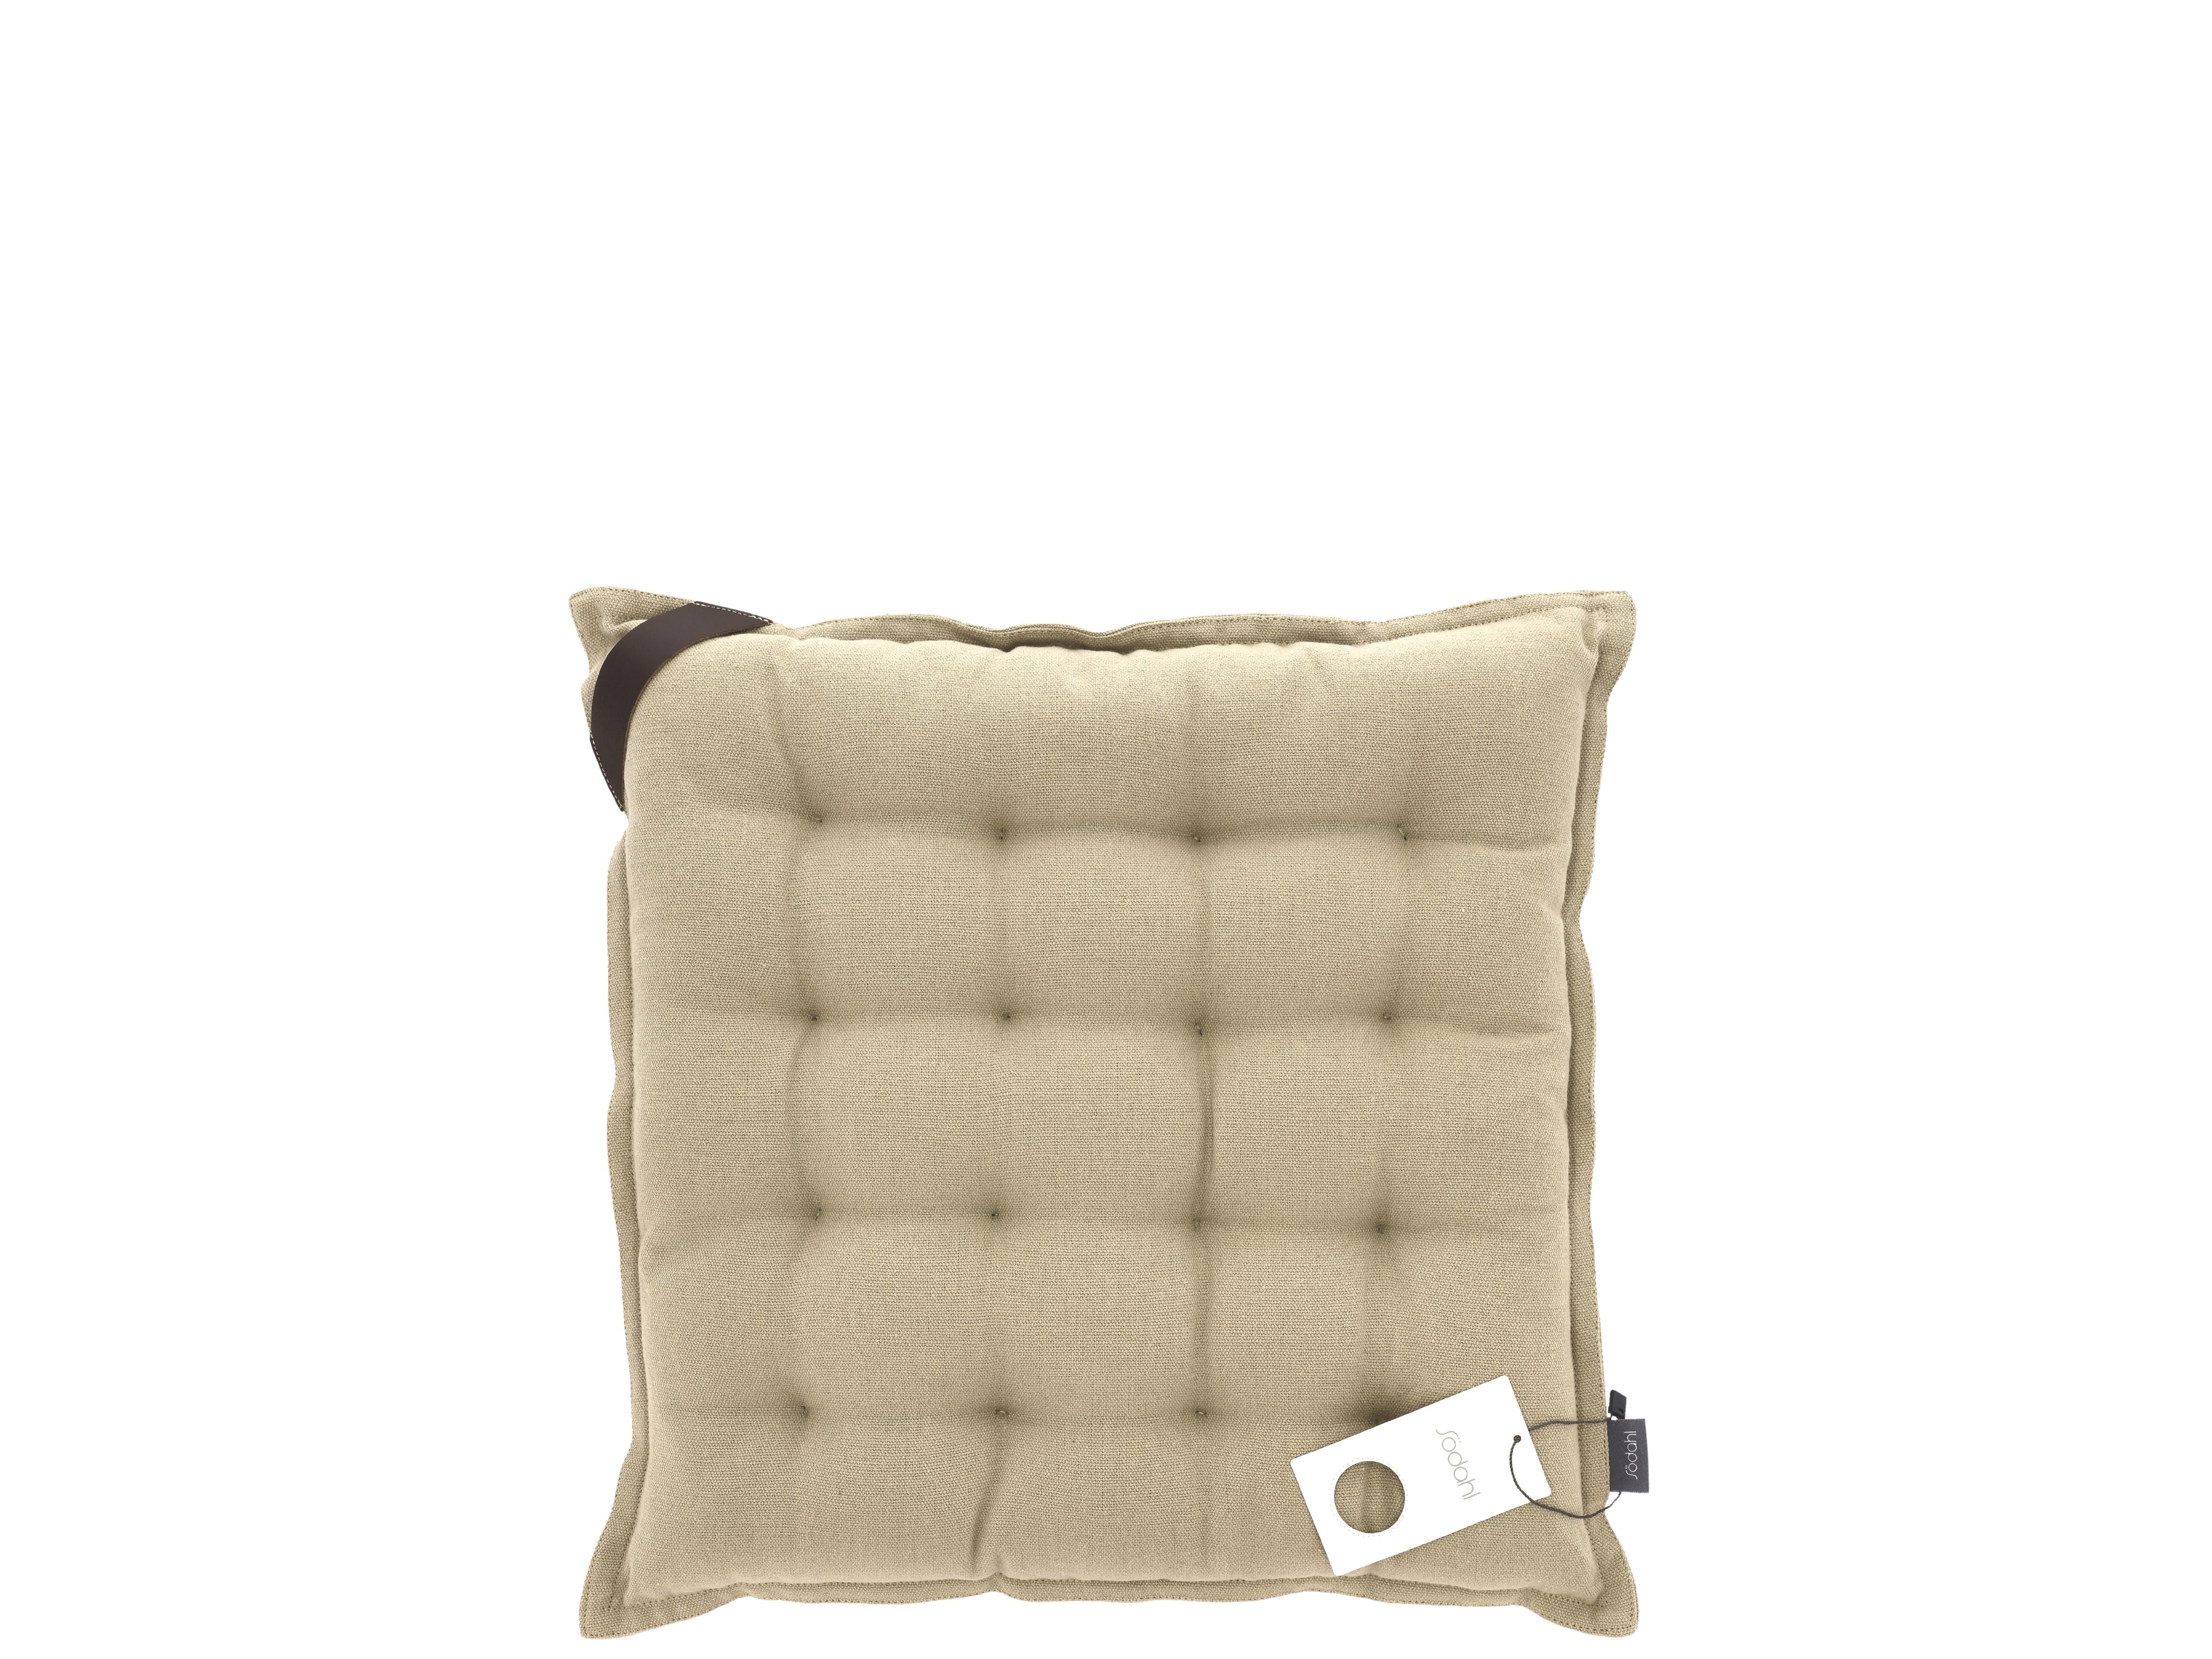 Södahl Match Seat Cushion 40 x 40 cm, marinblå